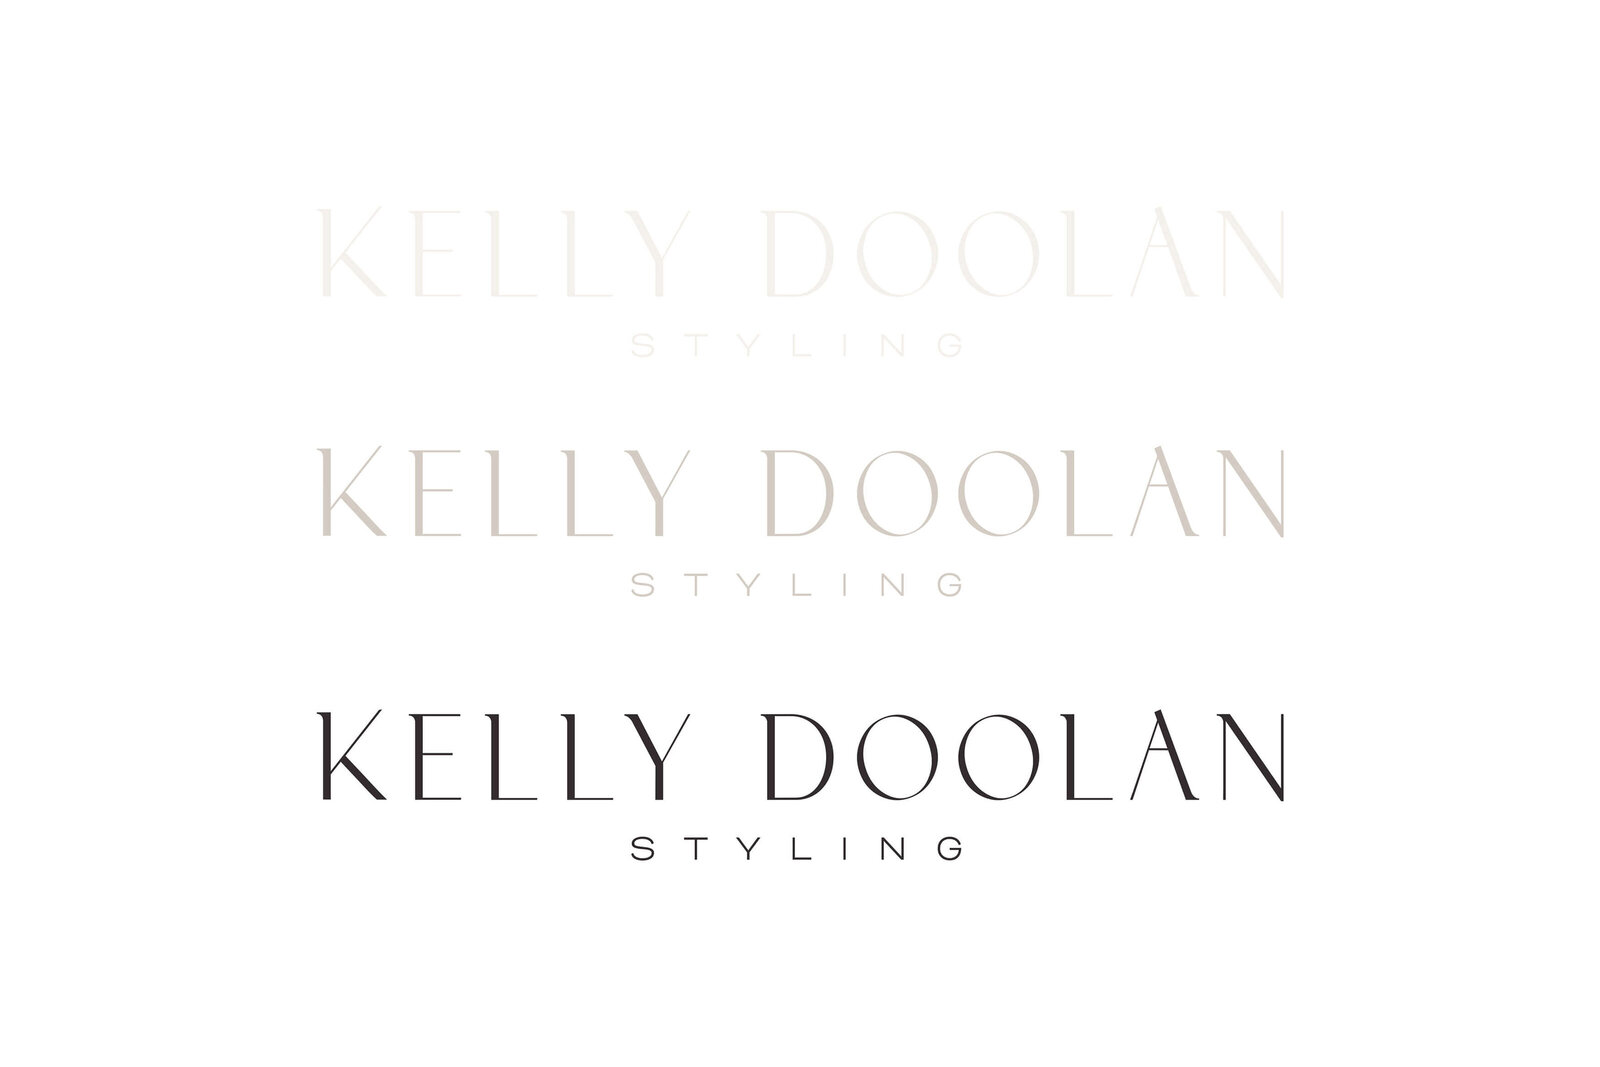 Chic-modern-logo-design-for-Kelly-Doolan-Styling-by-Fig-2-Design-1